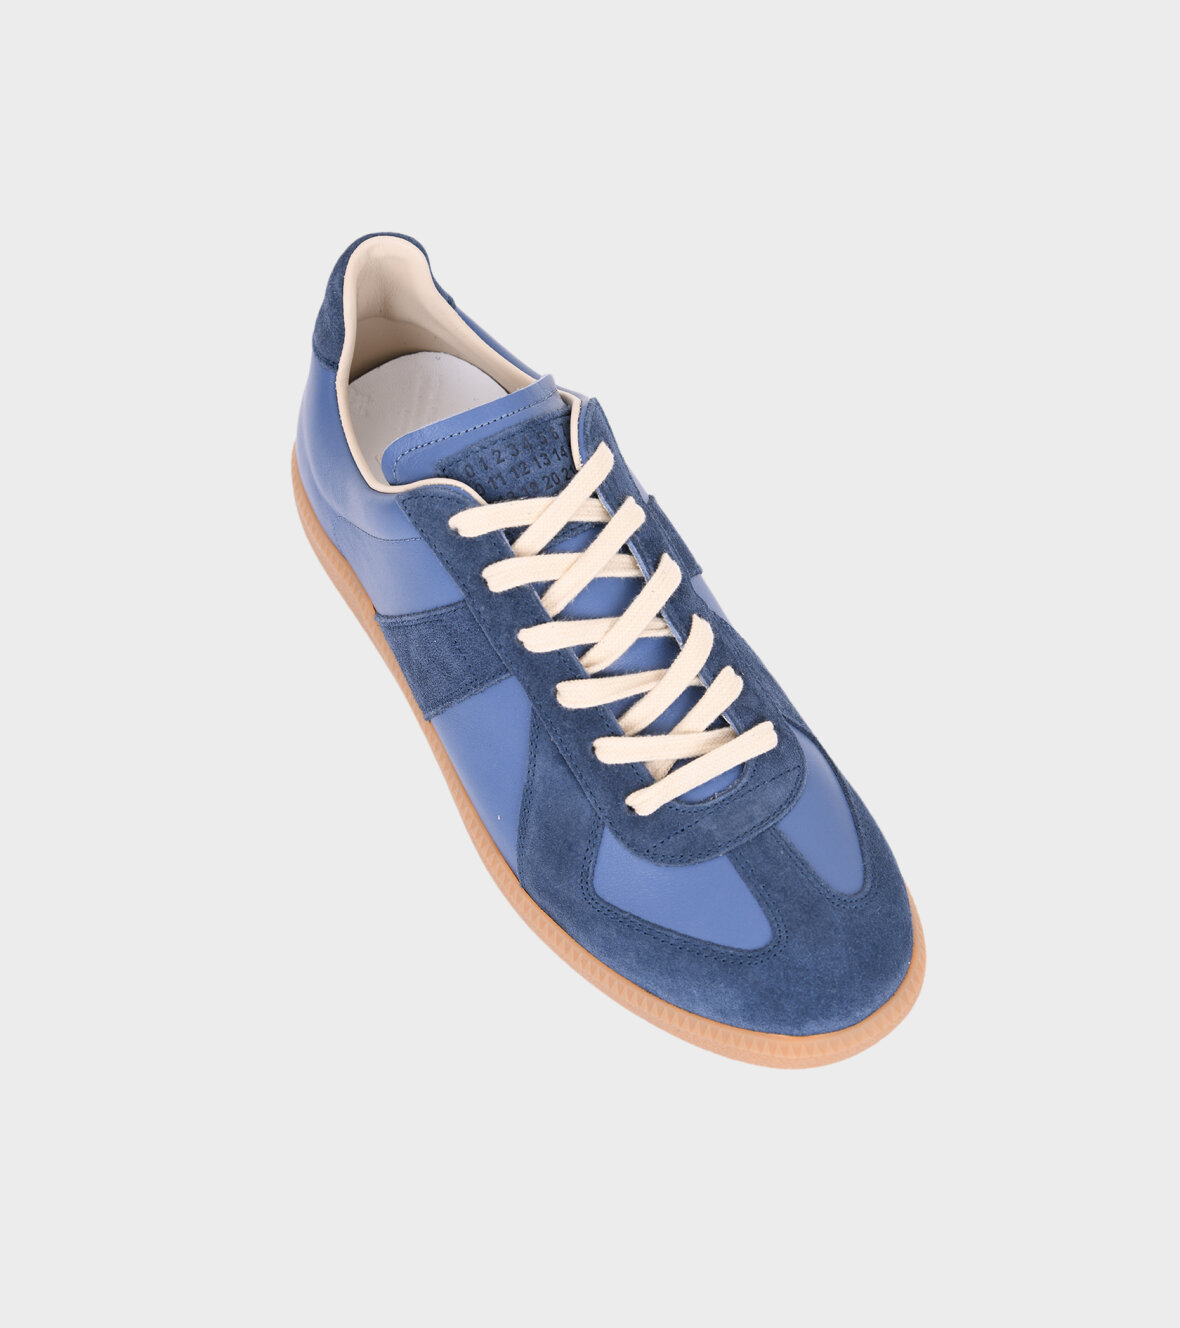 Formode Møntvask gå ind dr. Adams - Maison Margiela Replica Sneakers Blue